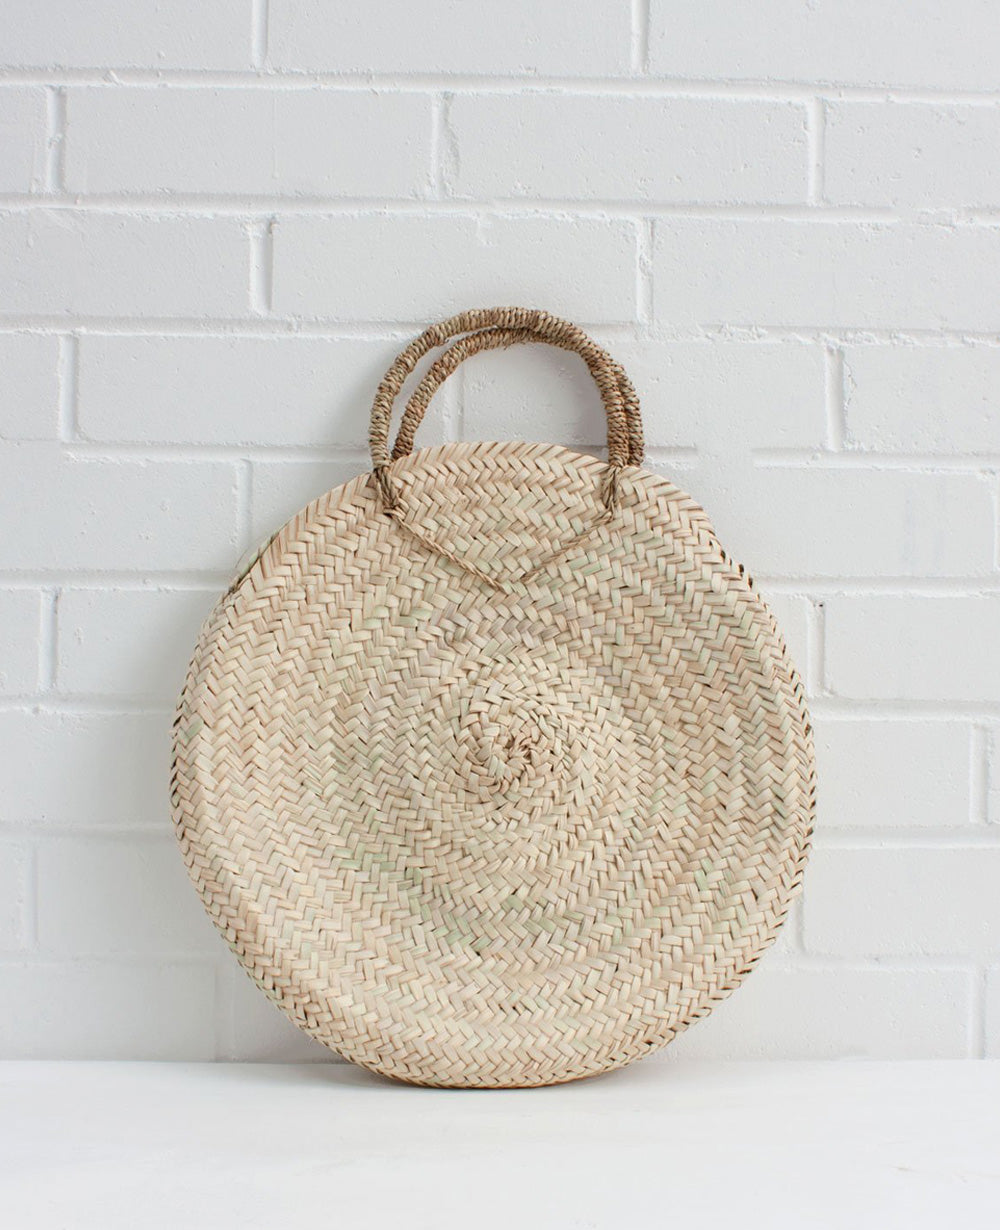 Buy Rattan Bags for Women - Handmade Wicker Woven Purse Handbag Circle Boho  Bag Bali, Solid Leaves Pattern, 20cm x 8cm at Amazon.in